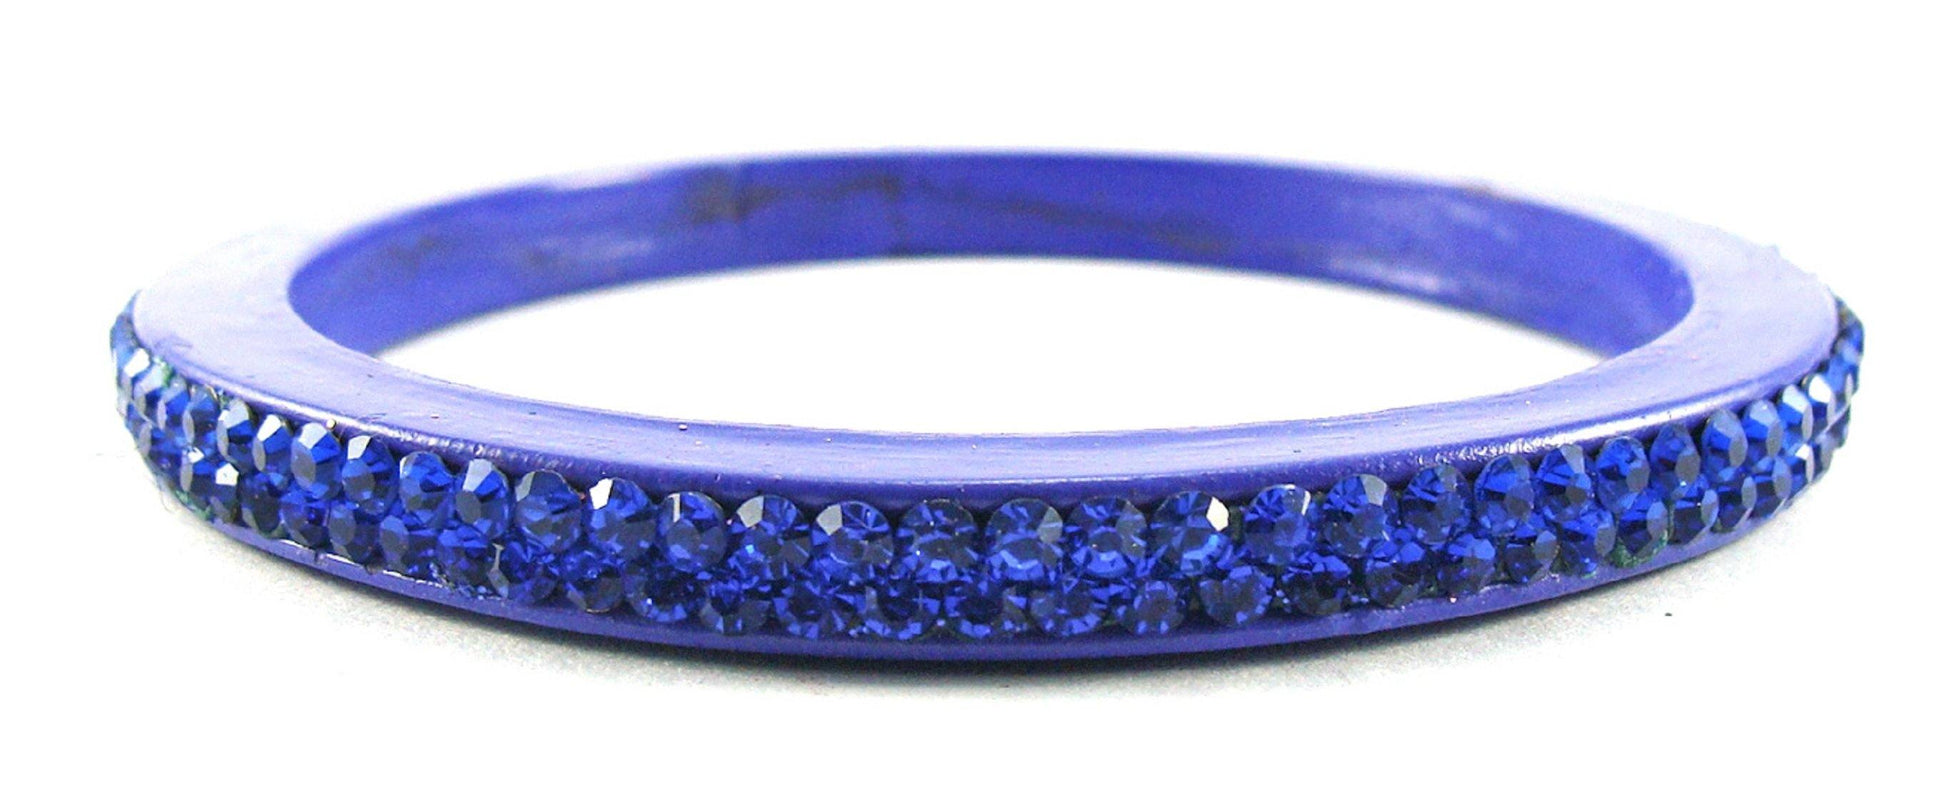 sukriti rajasthani blue lac bangles for women - set of 4